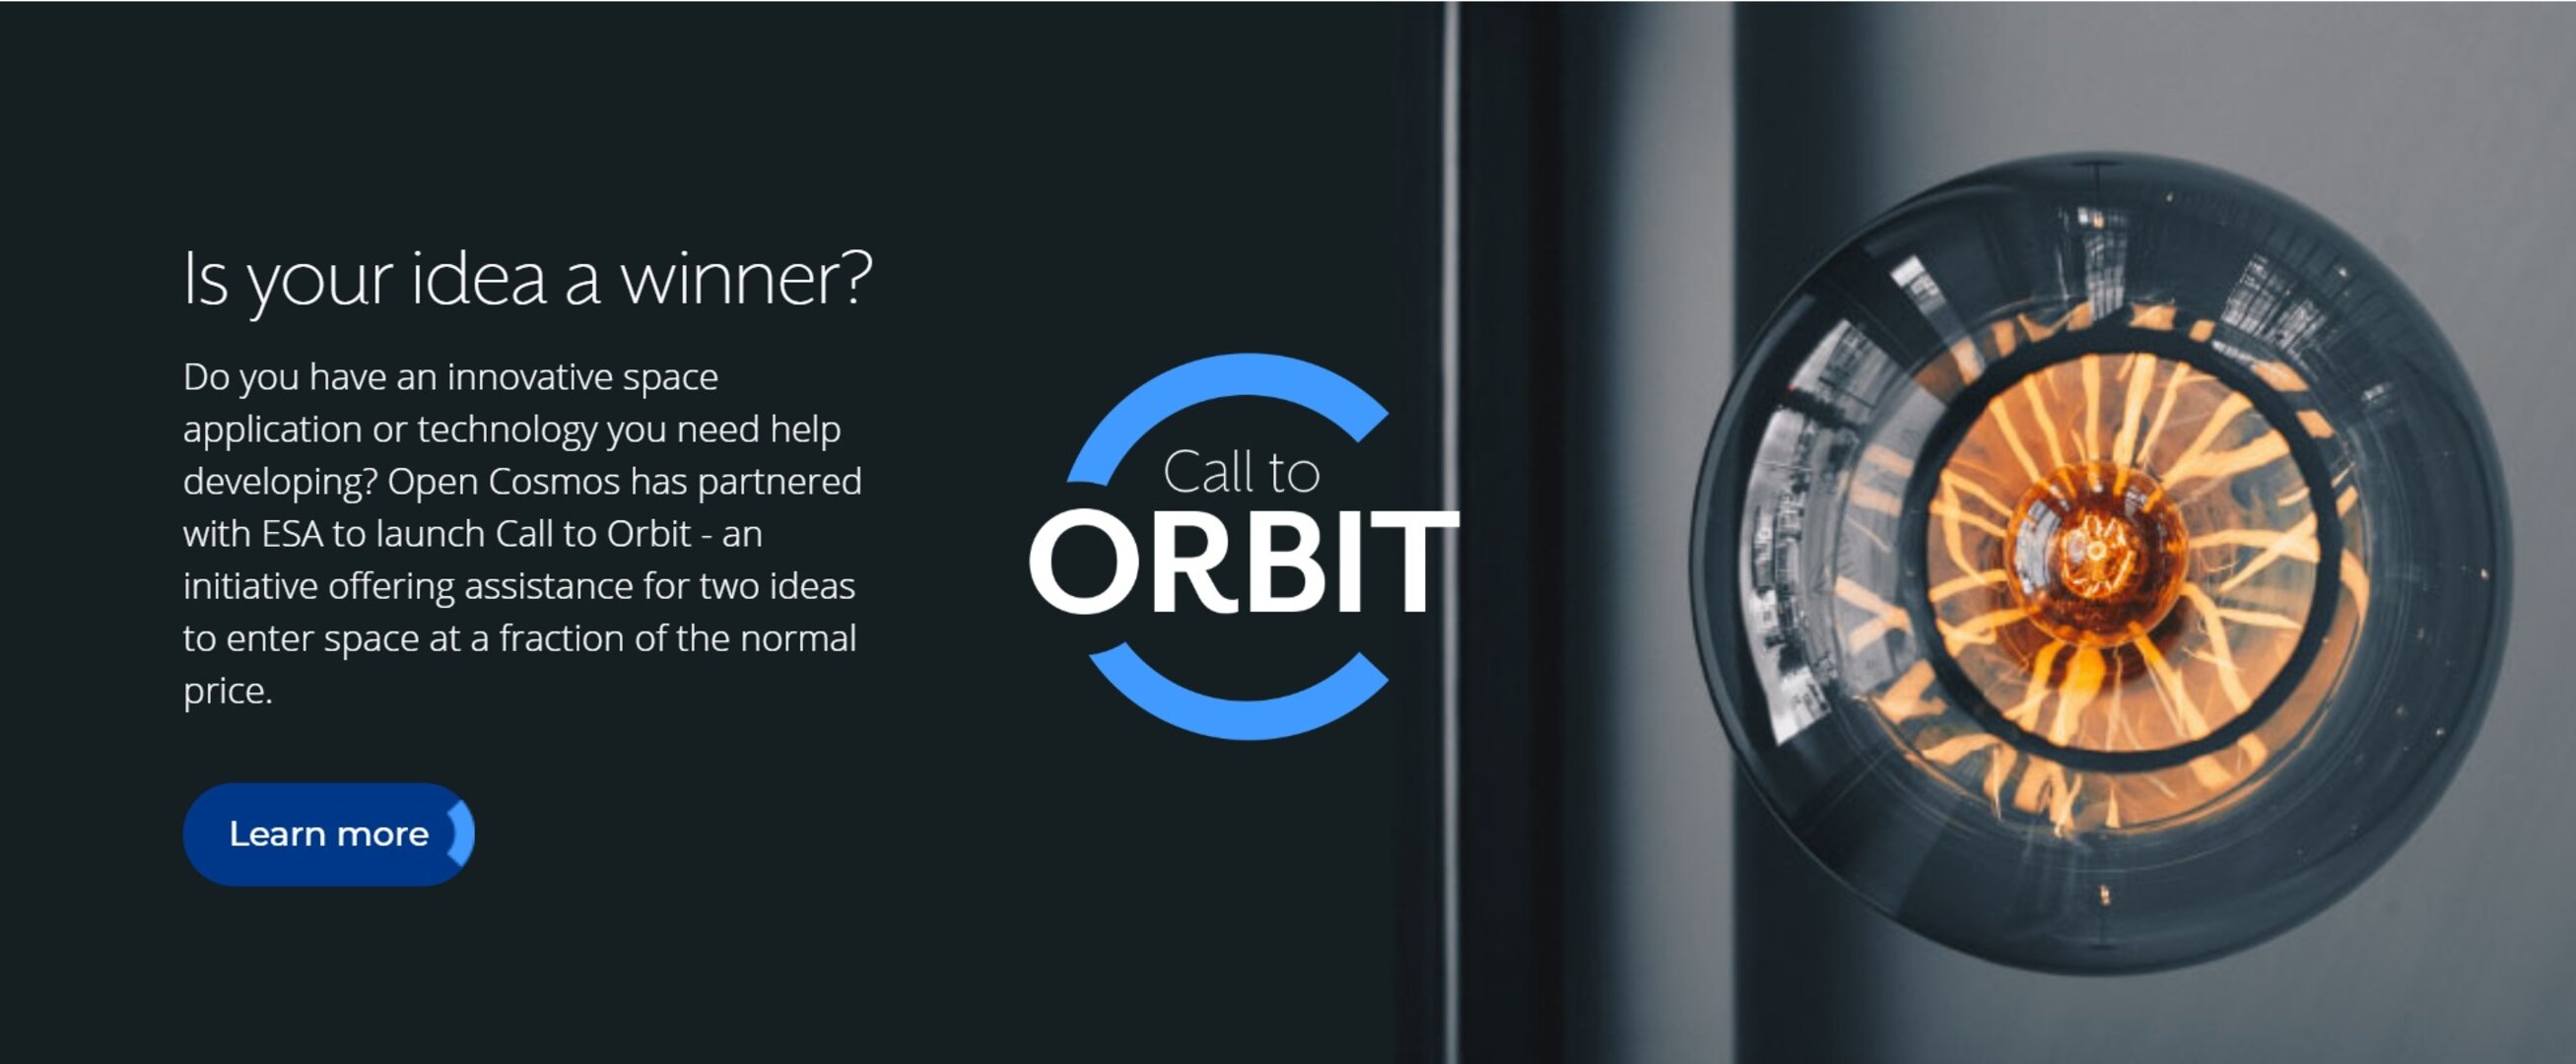 Open Cosmos: Call To Orbit